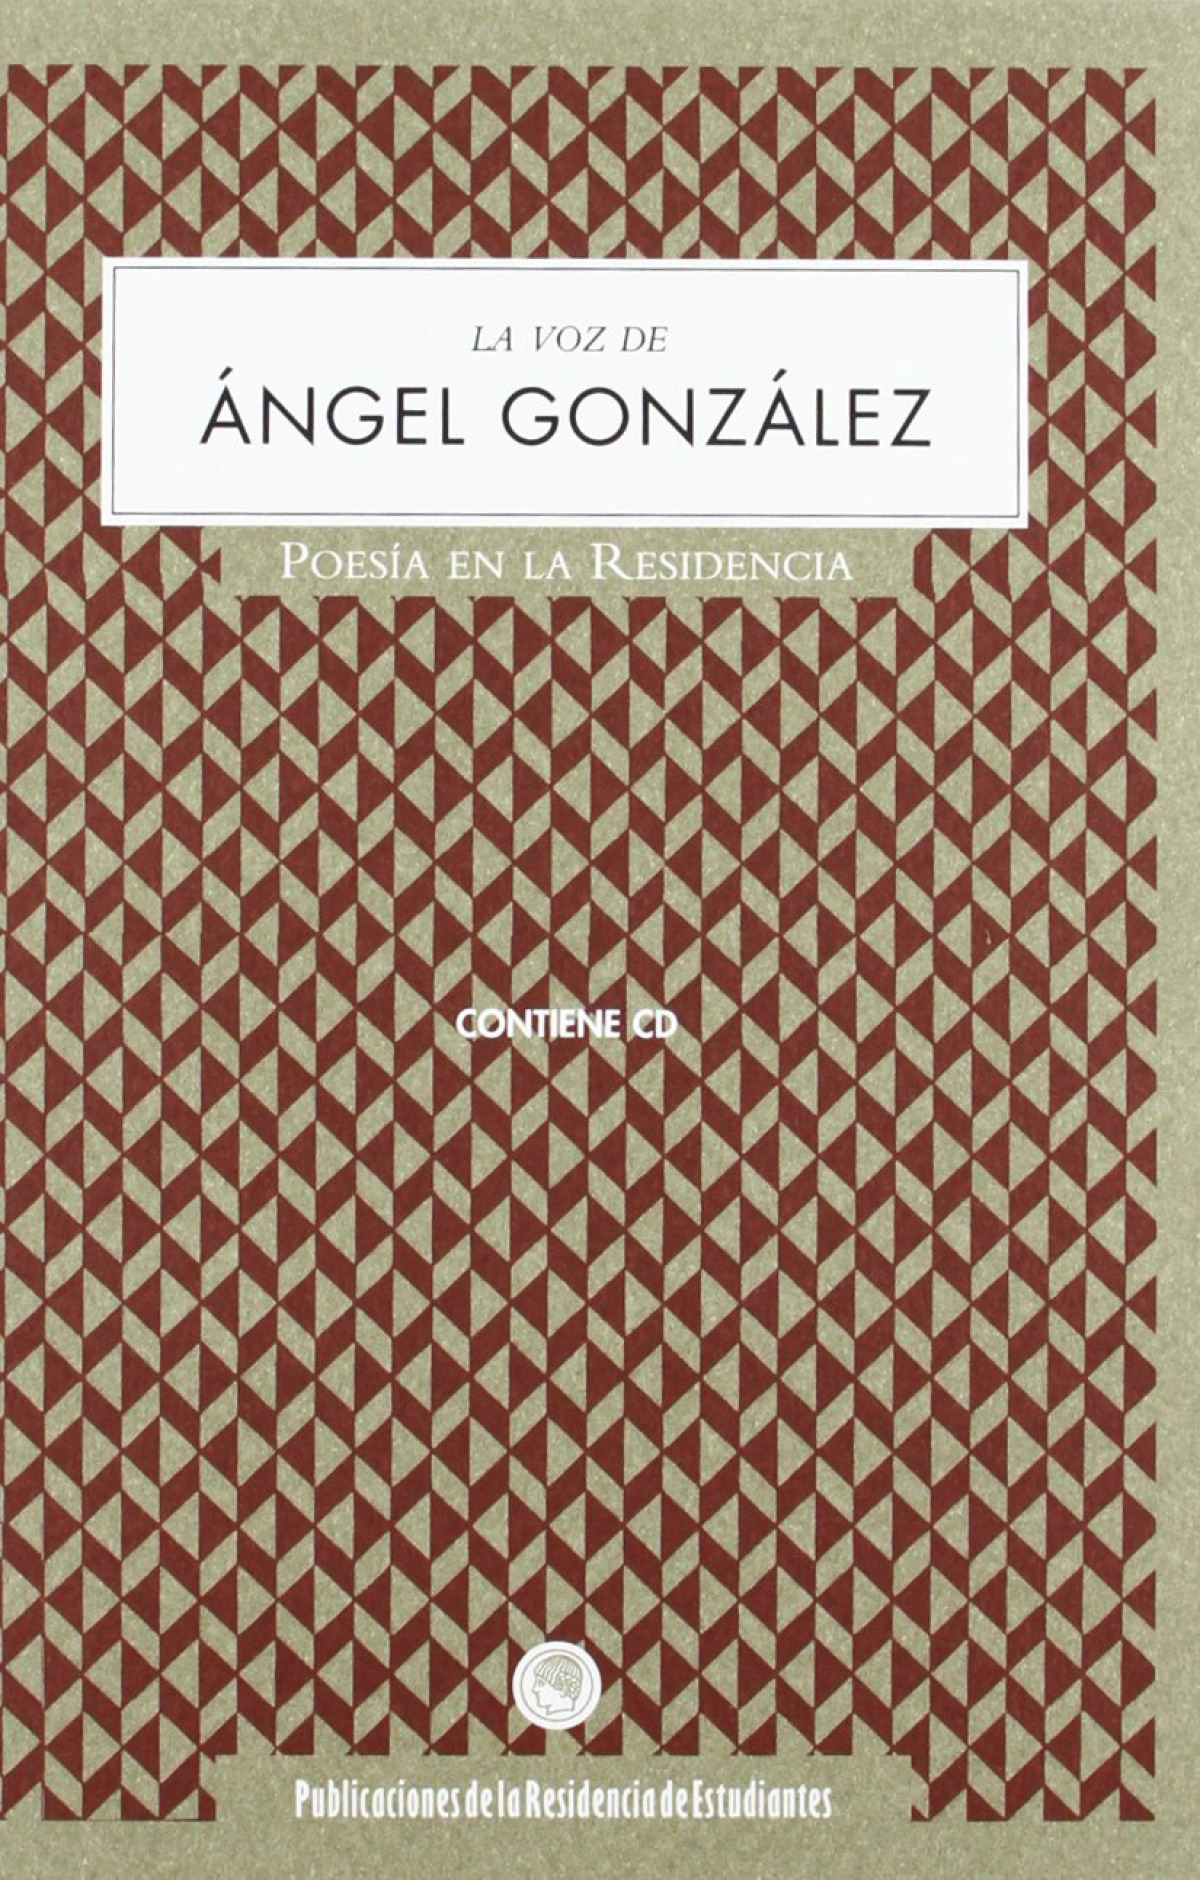 La voz de Ángel González POESIA EN LA RESIDENCIA - González, Ángel